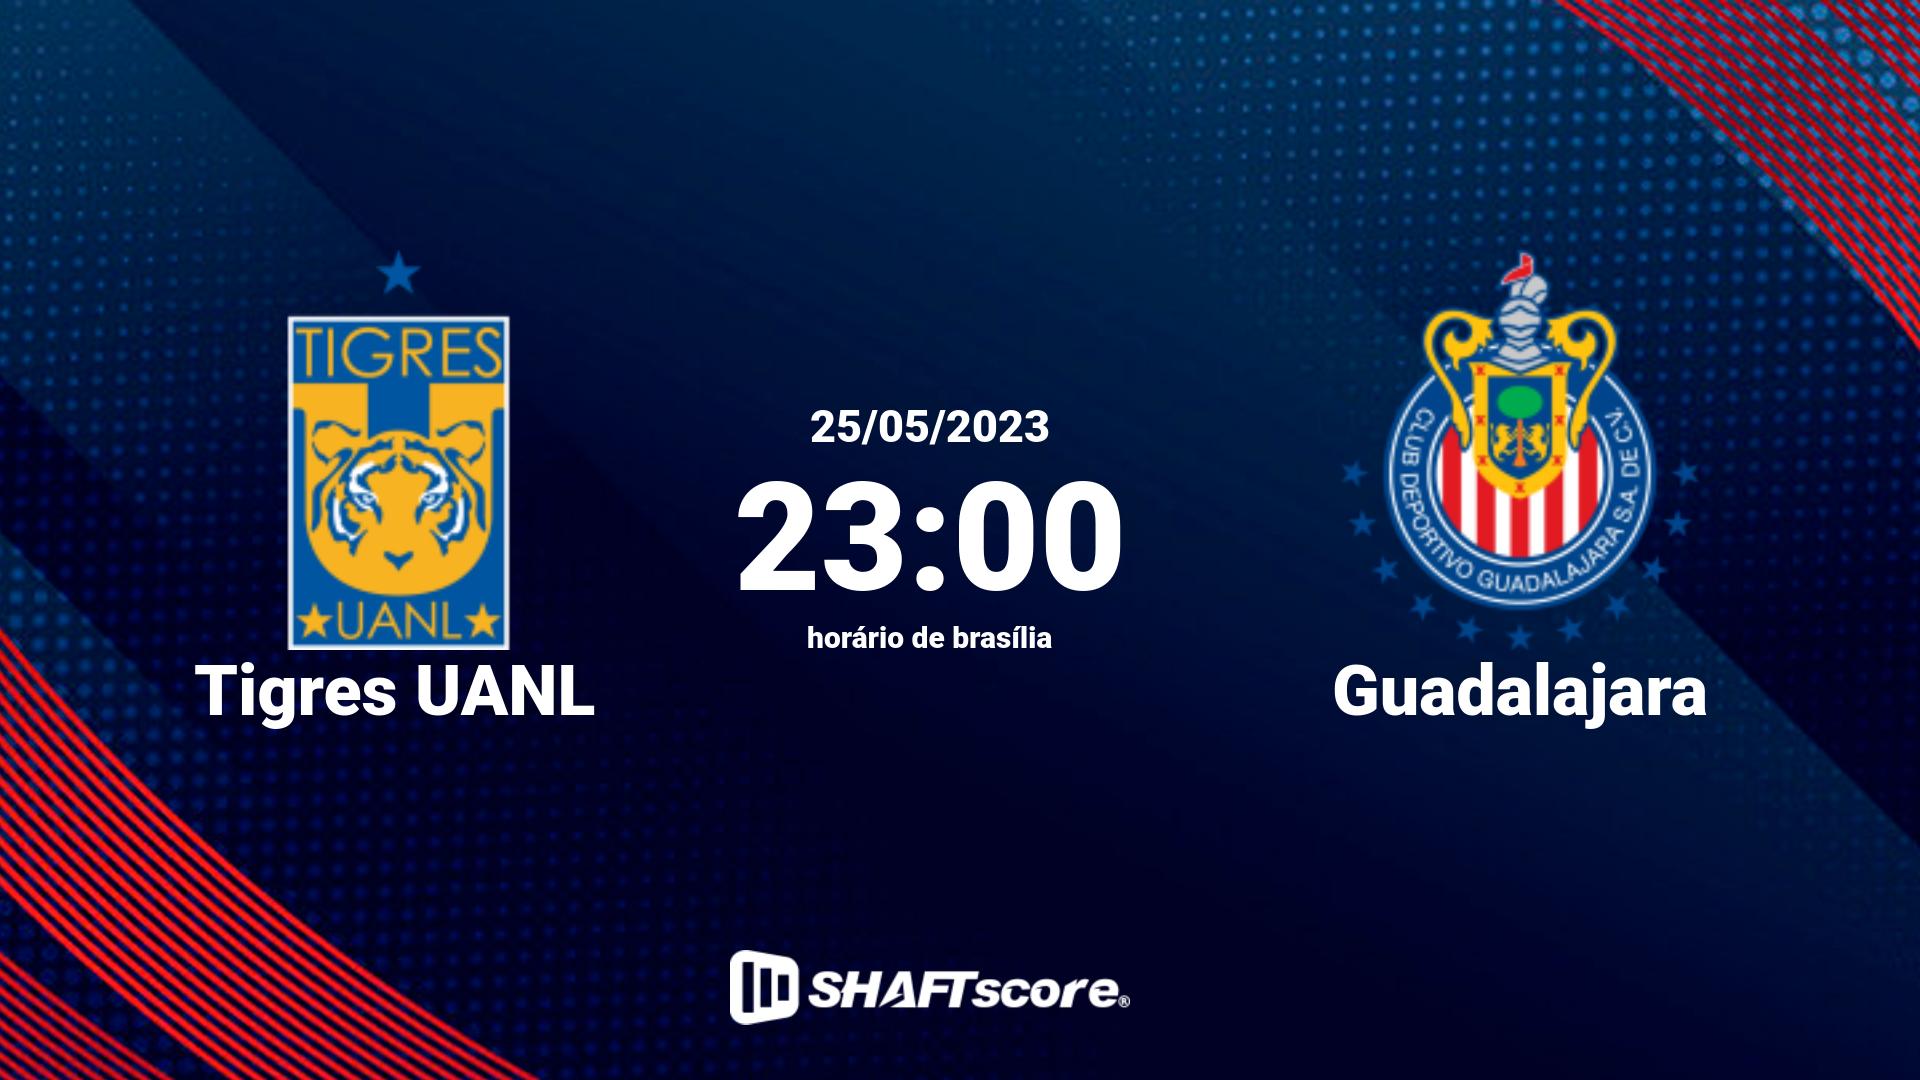 Estatísticas do jogo Tigres UANL vs Guadalajara 25.05 23:00